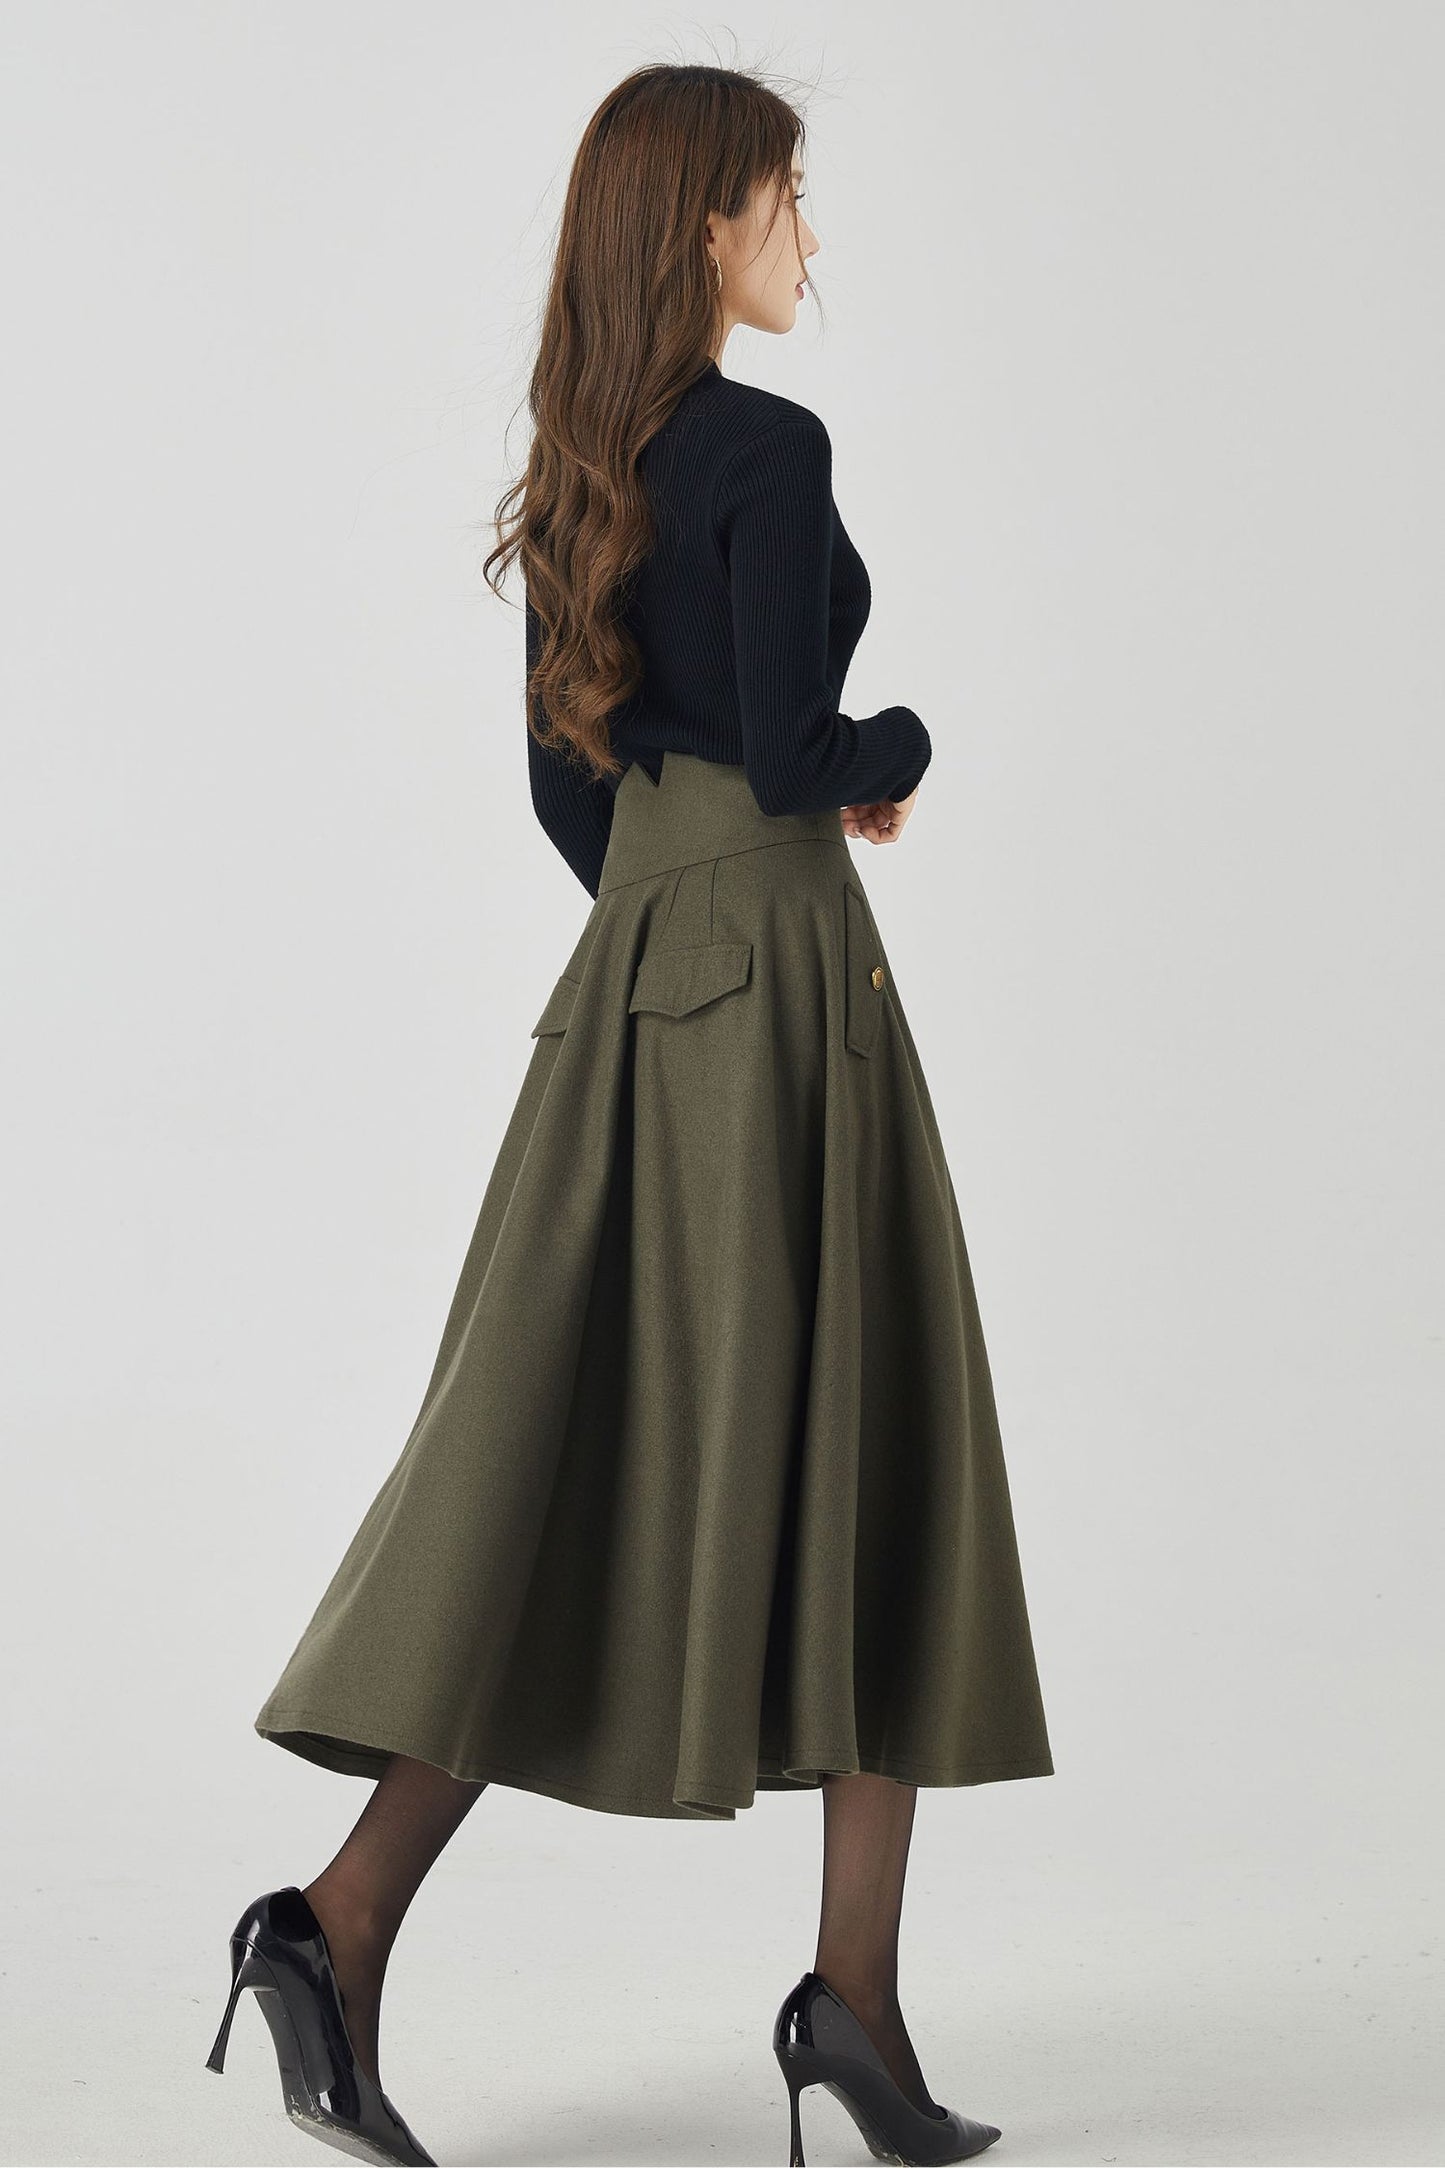 Army green swing winter wool skirt 4530